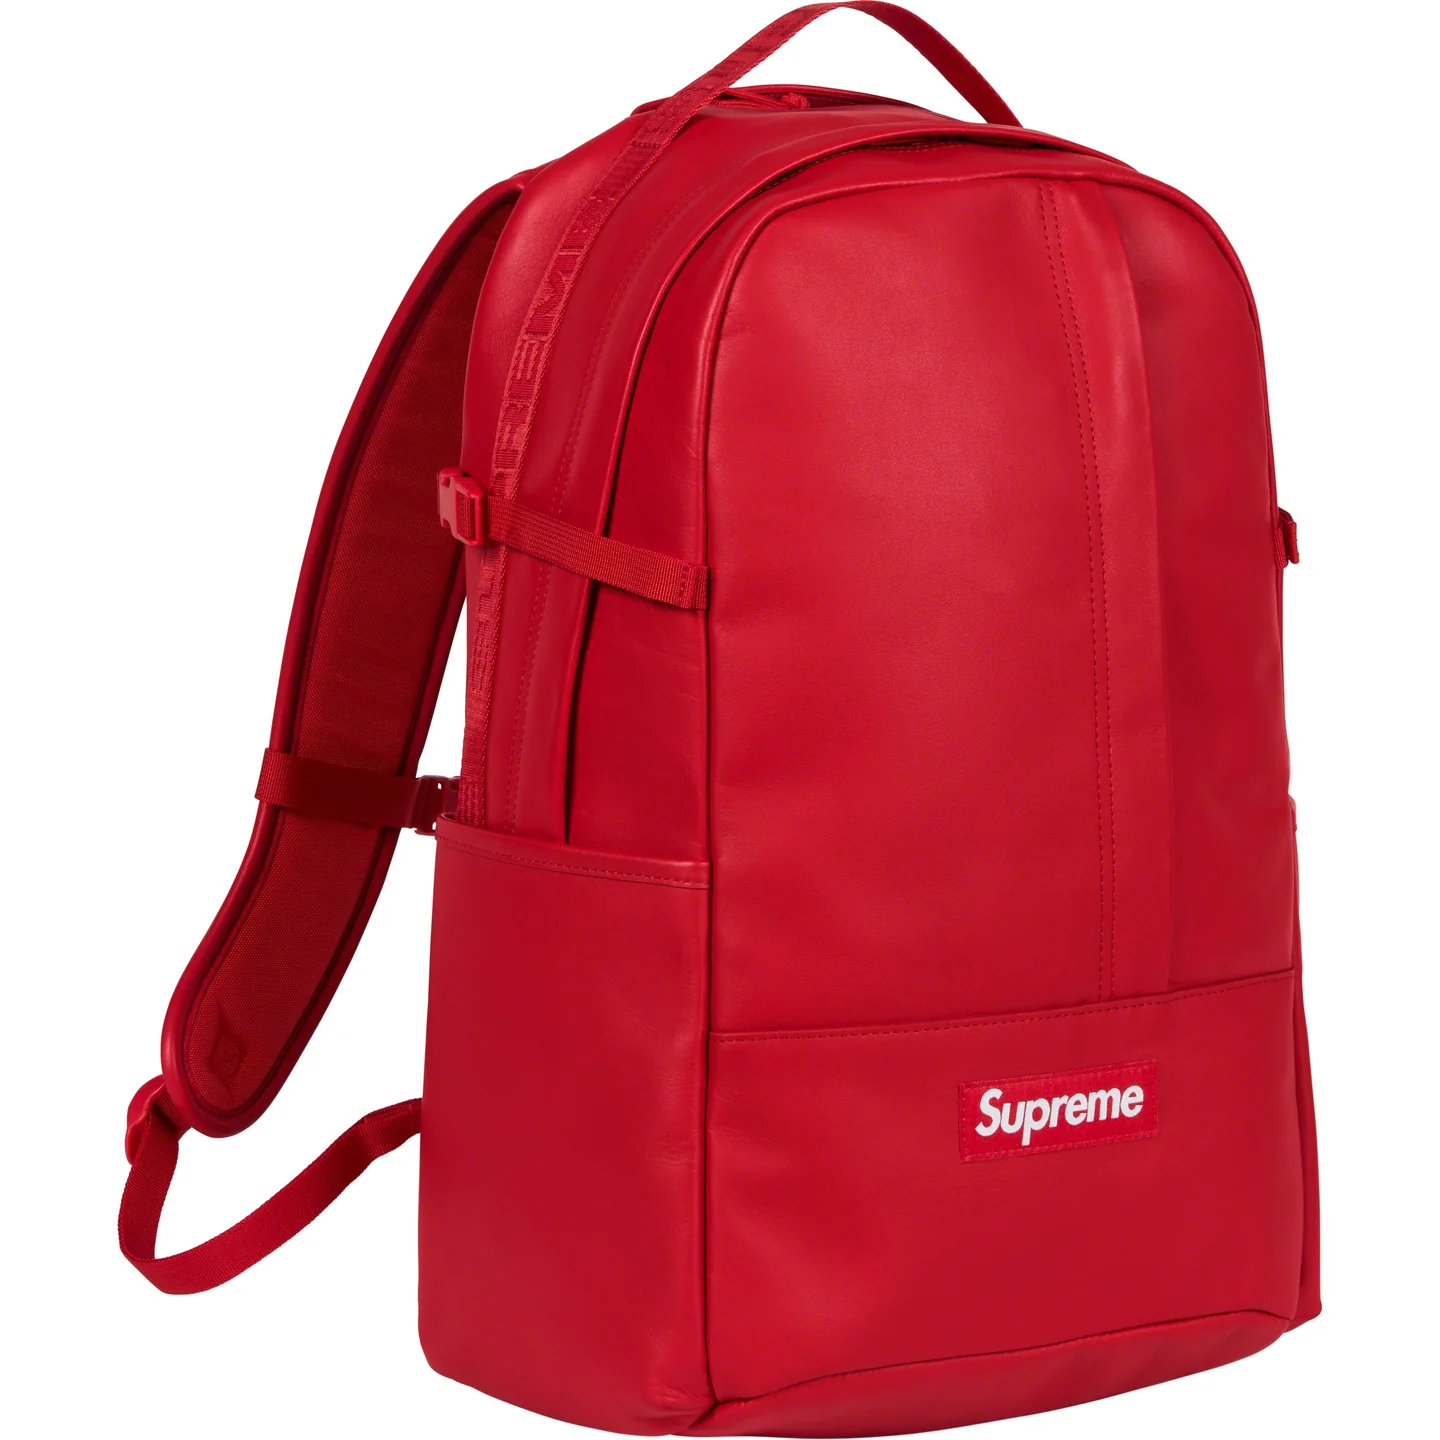 Supreme Leather Backpack